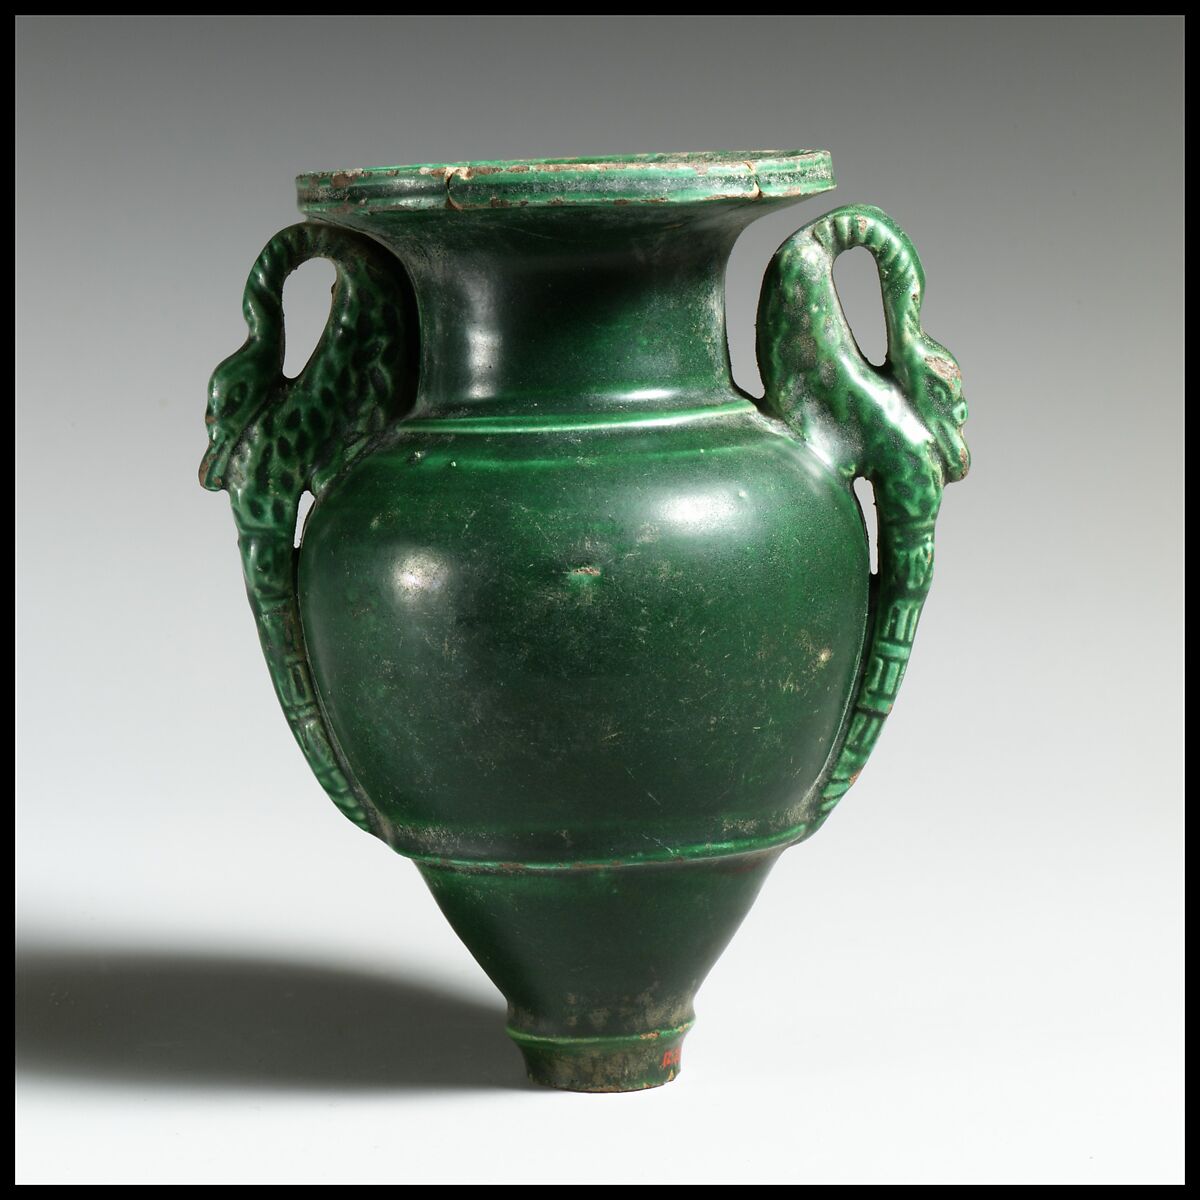 Terracotta amphora (two-handled jar), Terracotta, Roman 